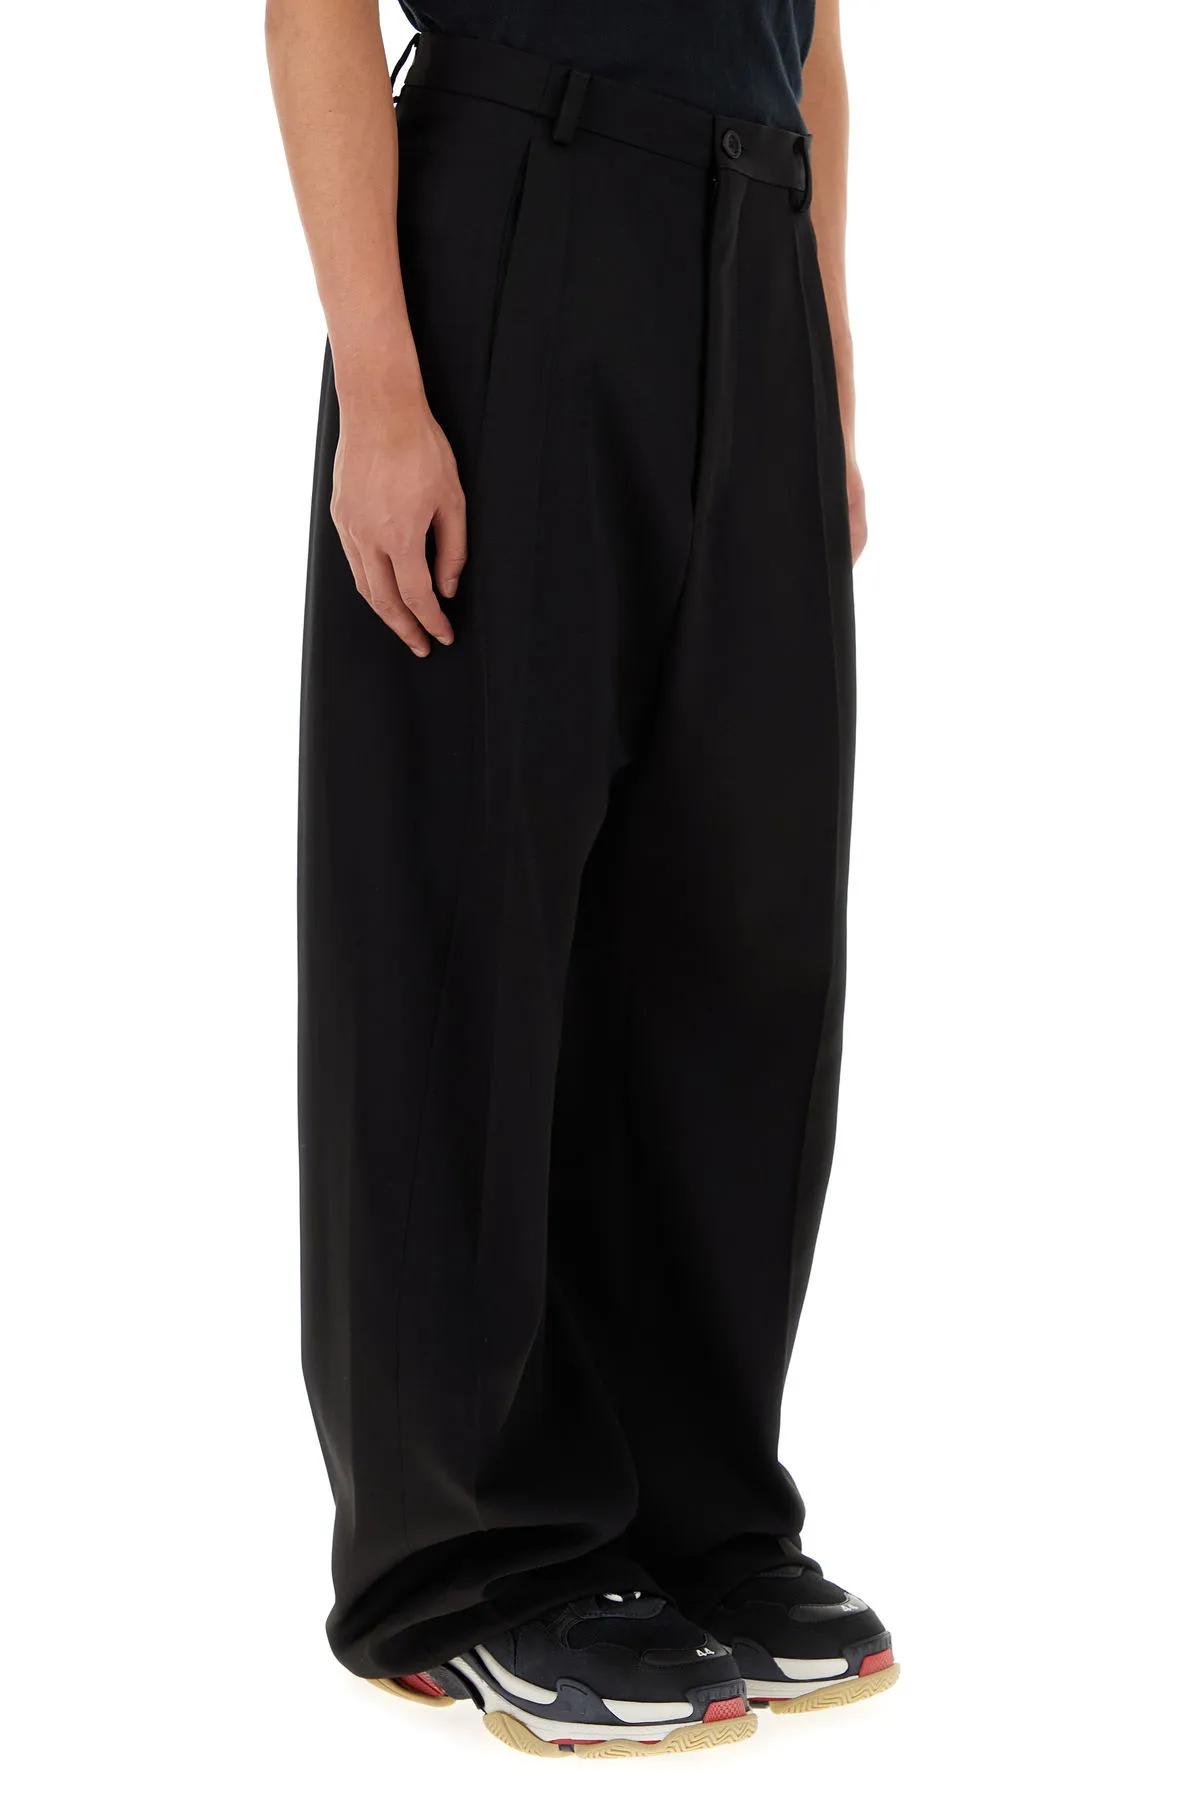 Shop Balenciaga Black Wool Wide-leg Pant